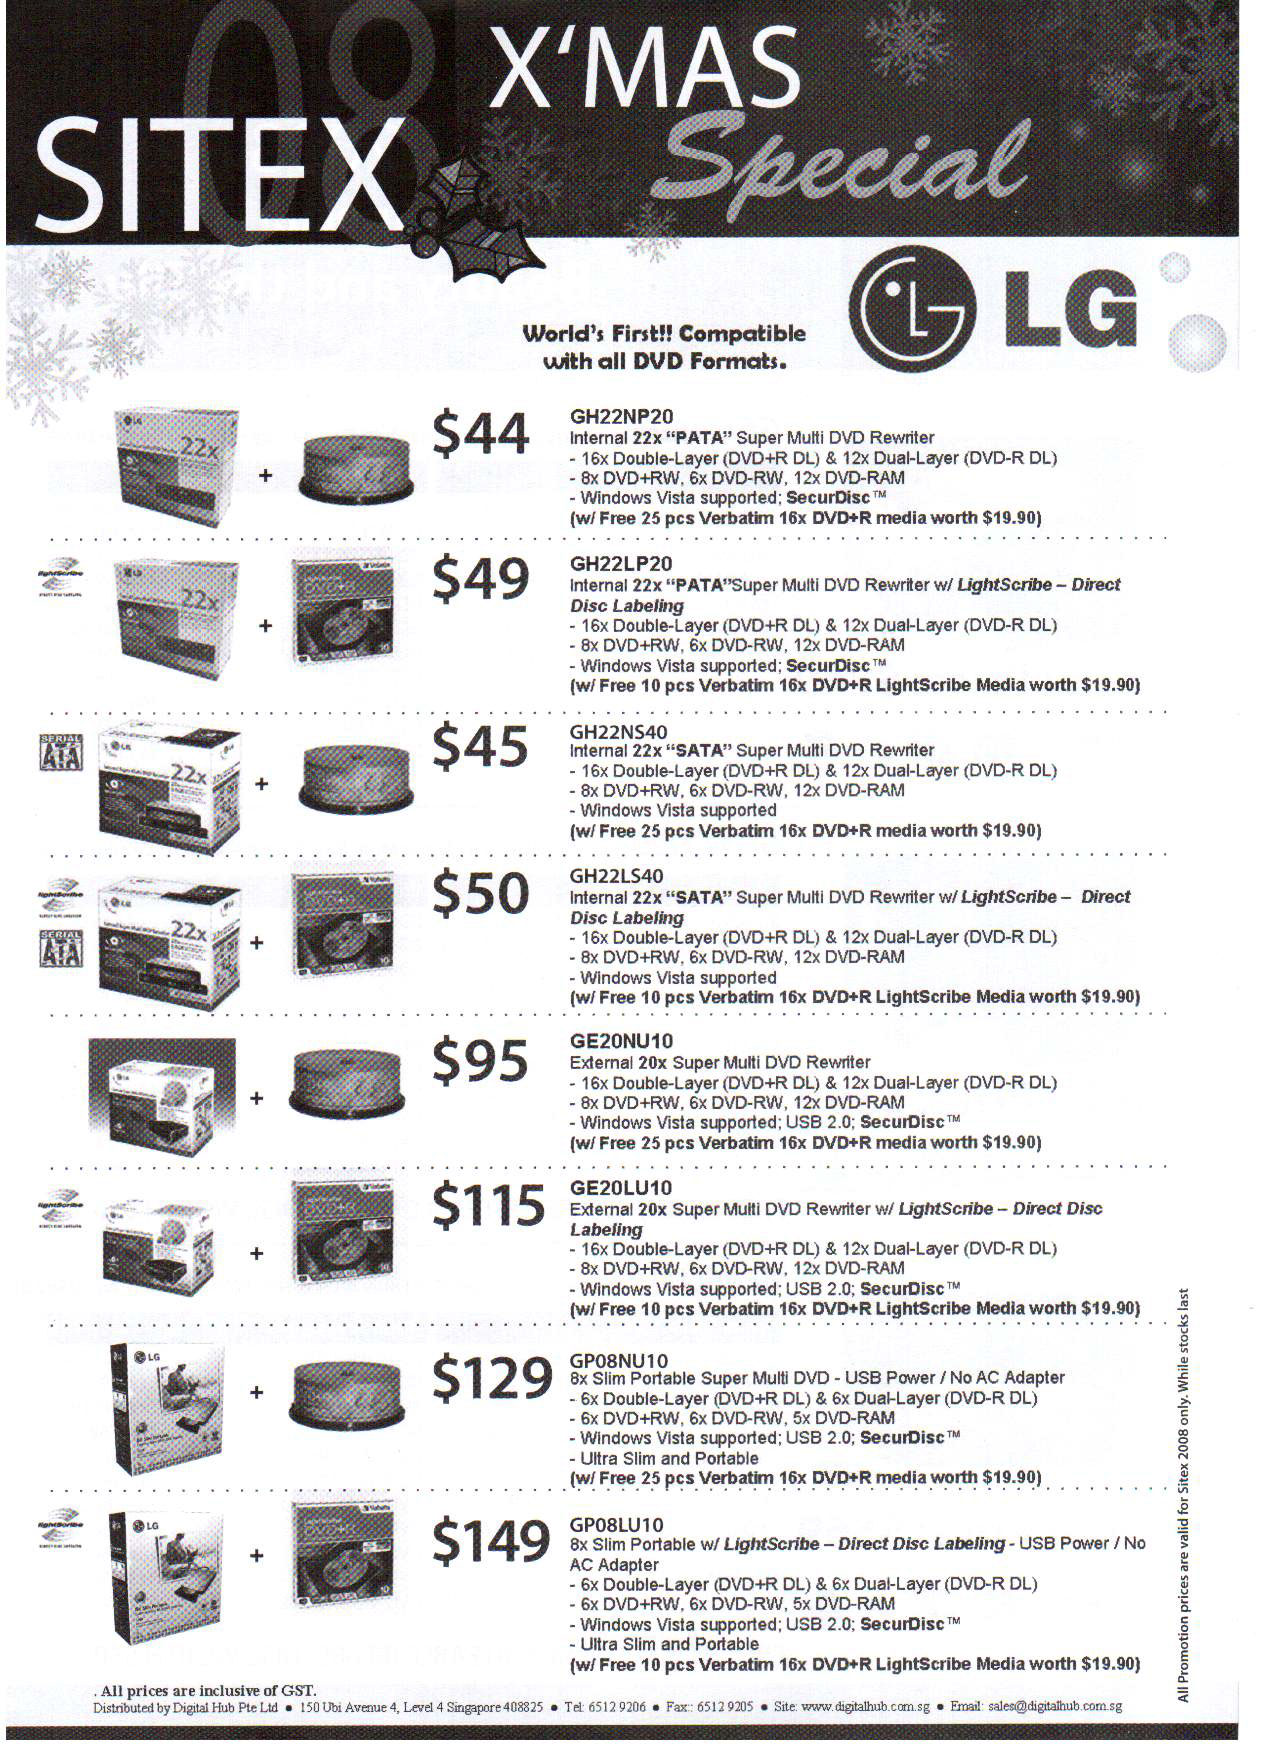 Sitex 2008 price list image brochure of LG Cd Dvd Optical Drives 3